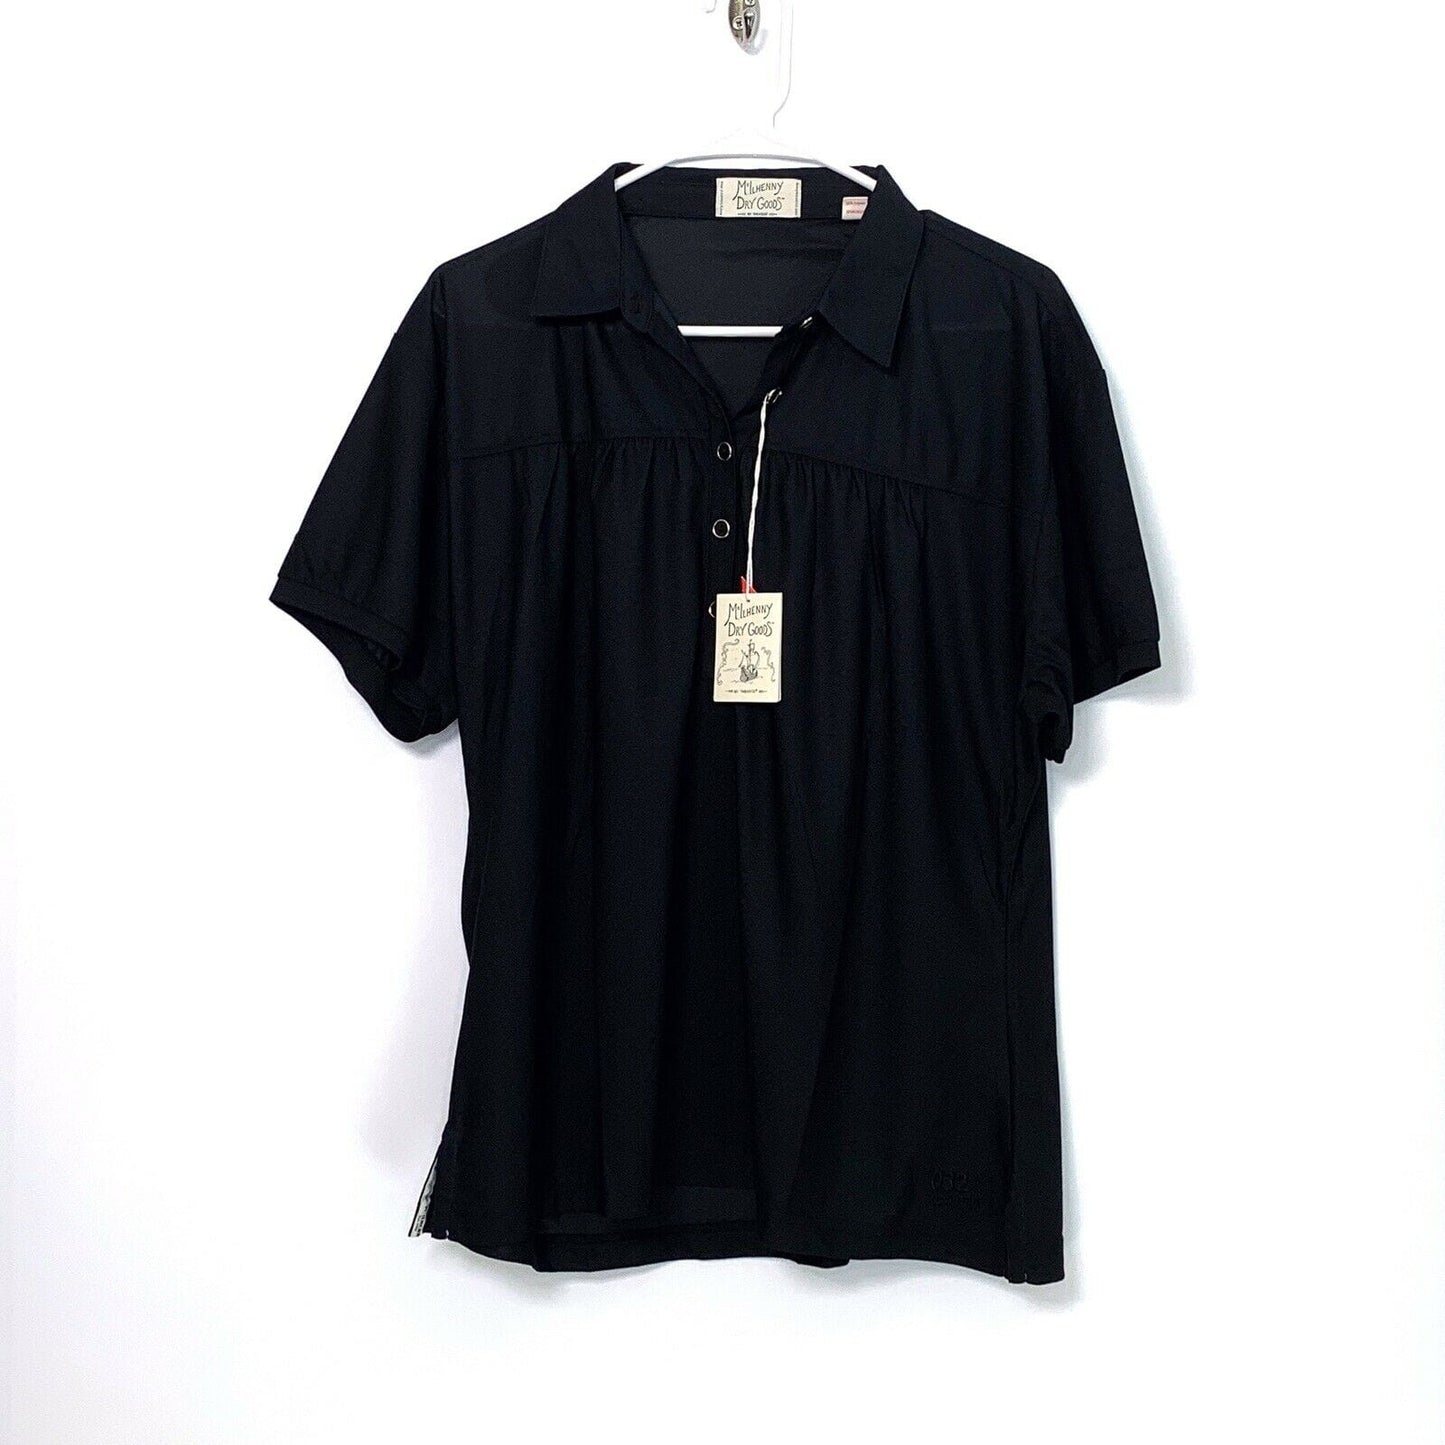 McIlhenny Dry Goods Womens Size XL Black 032 Dry Reserve Polo Shirt